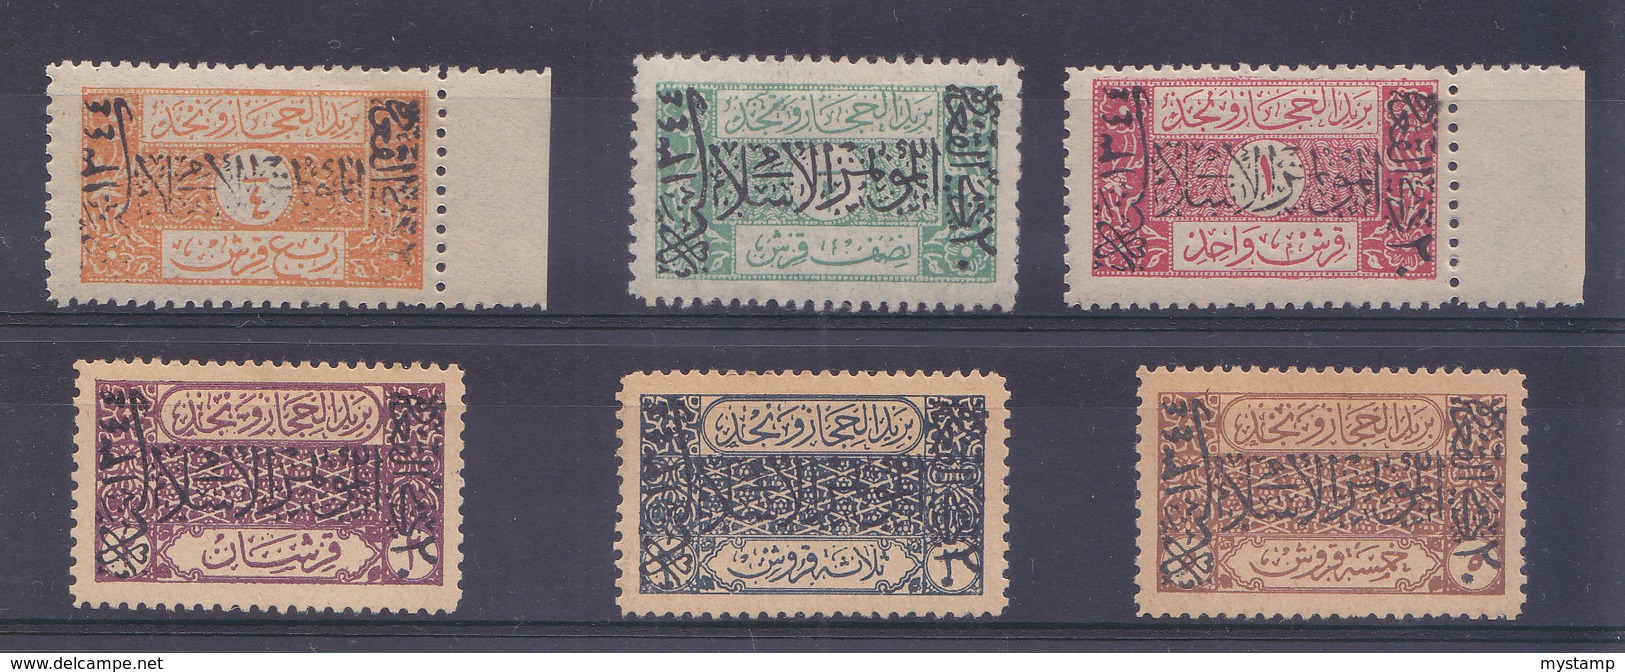 HEJAZ 1926 SAUDI ARABIA OPTED WITH PAN-ISLAMIC CONFERENCE HAND STAMP COMPLETE SET SG 275-280 MINT NH - Saudi Arabia